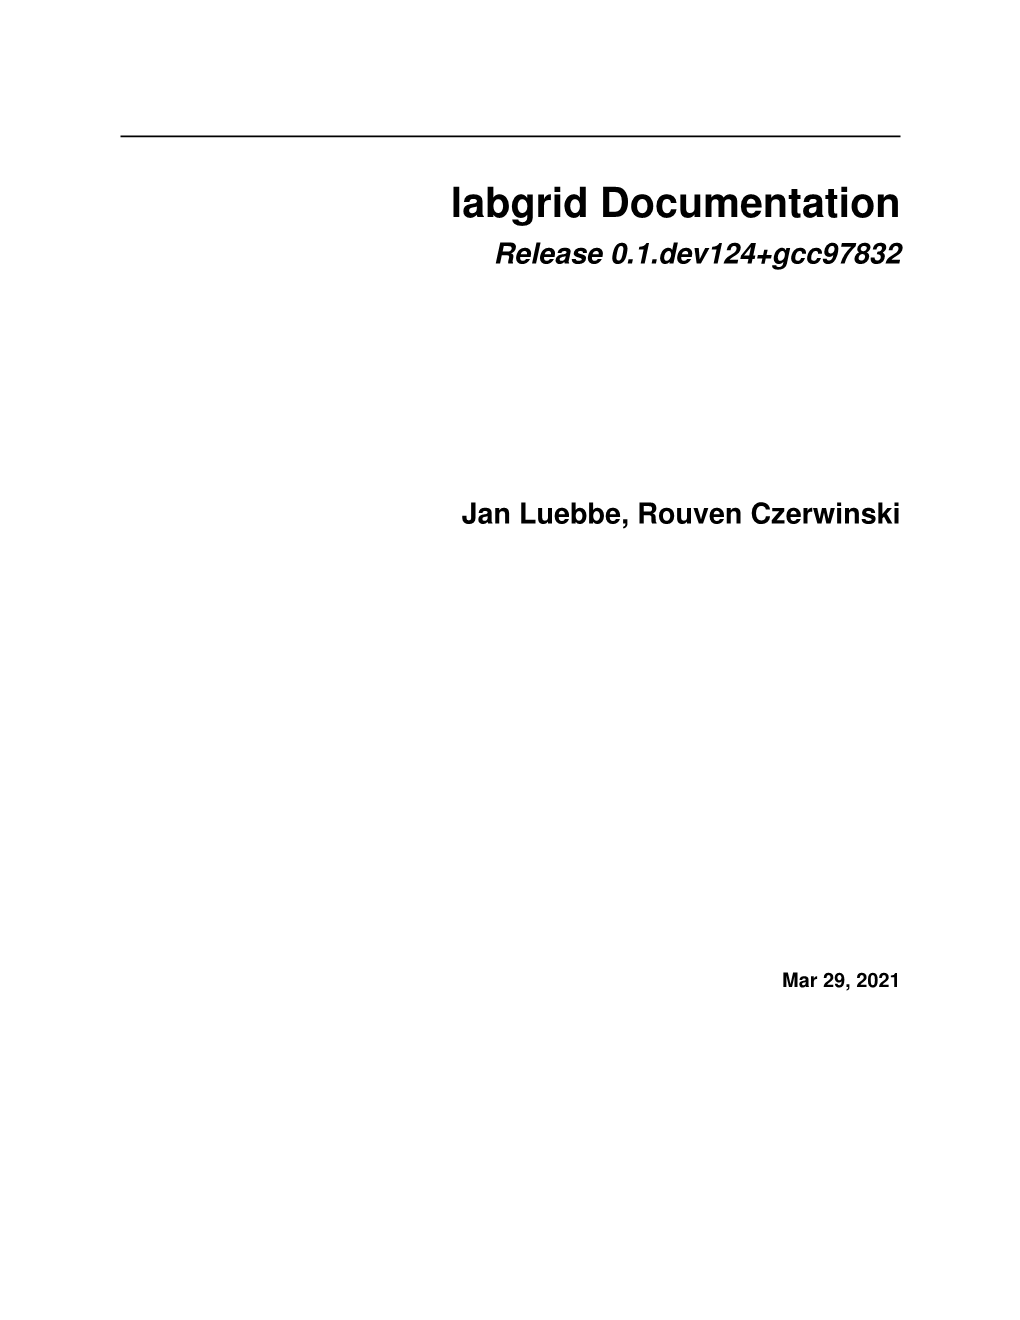 Labgrid Documentation Release 0.1.Dev124+Gcc97832